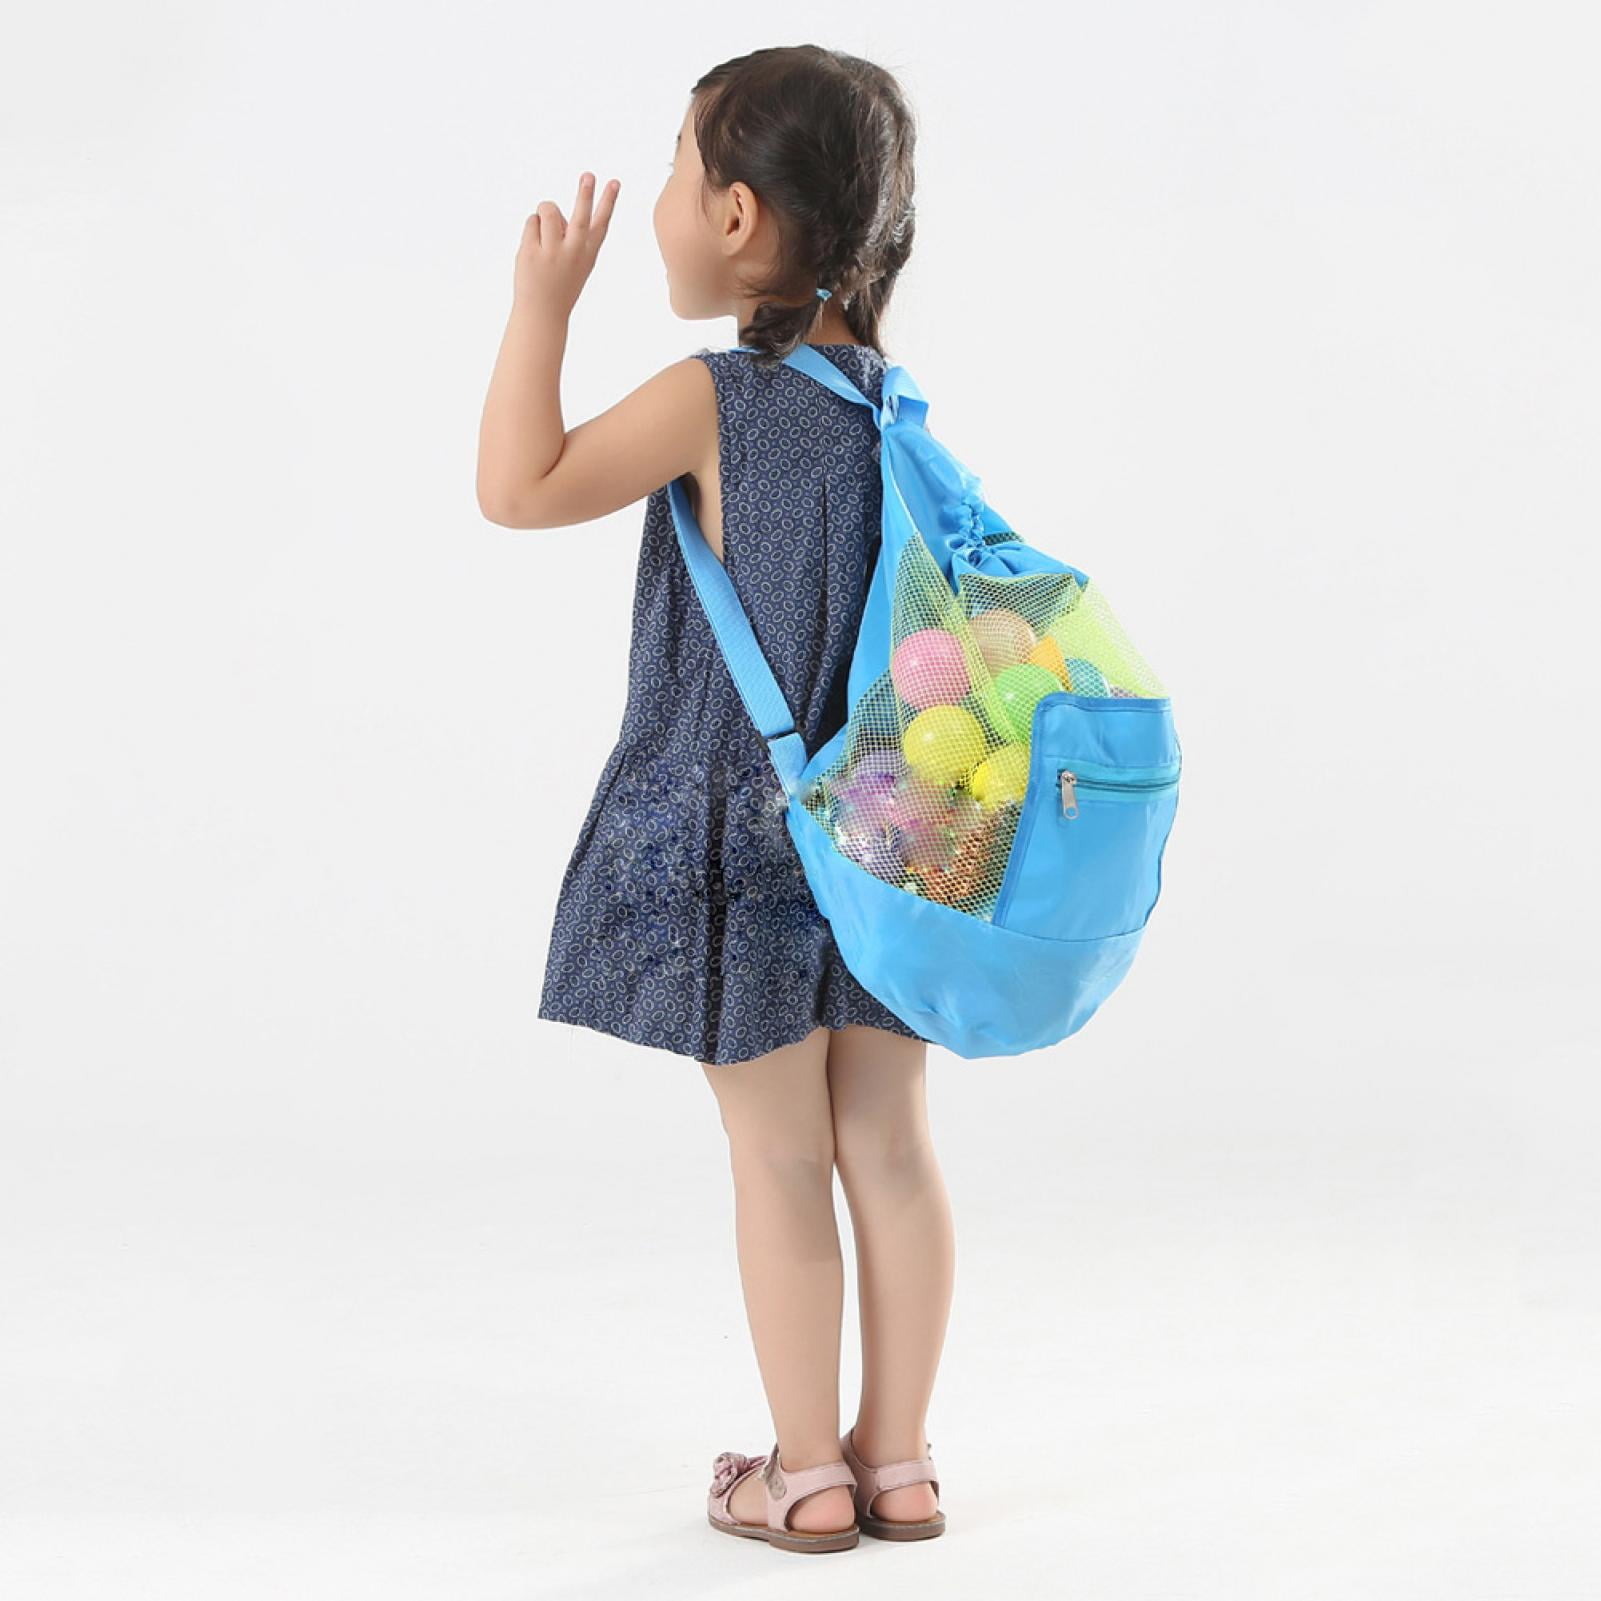 Shop Kids Beach Bags Online - Fast Shipping & Easy Returns - City Beach  Australia